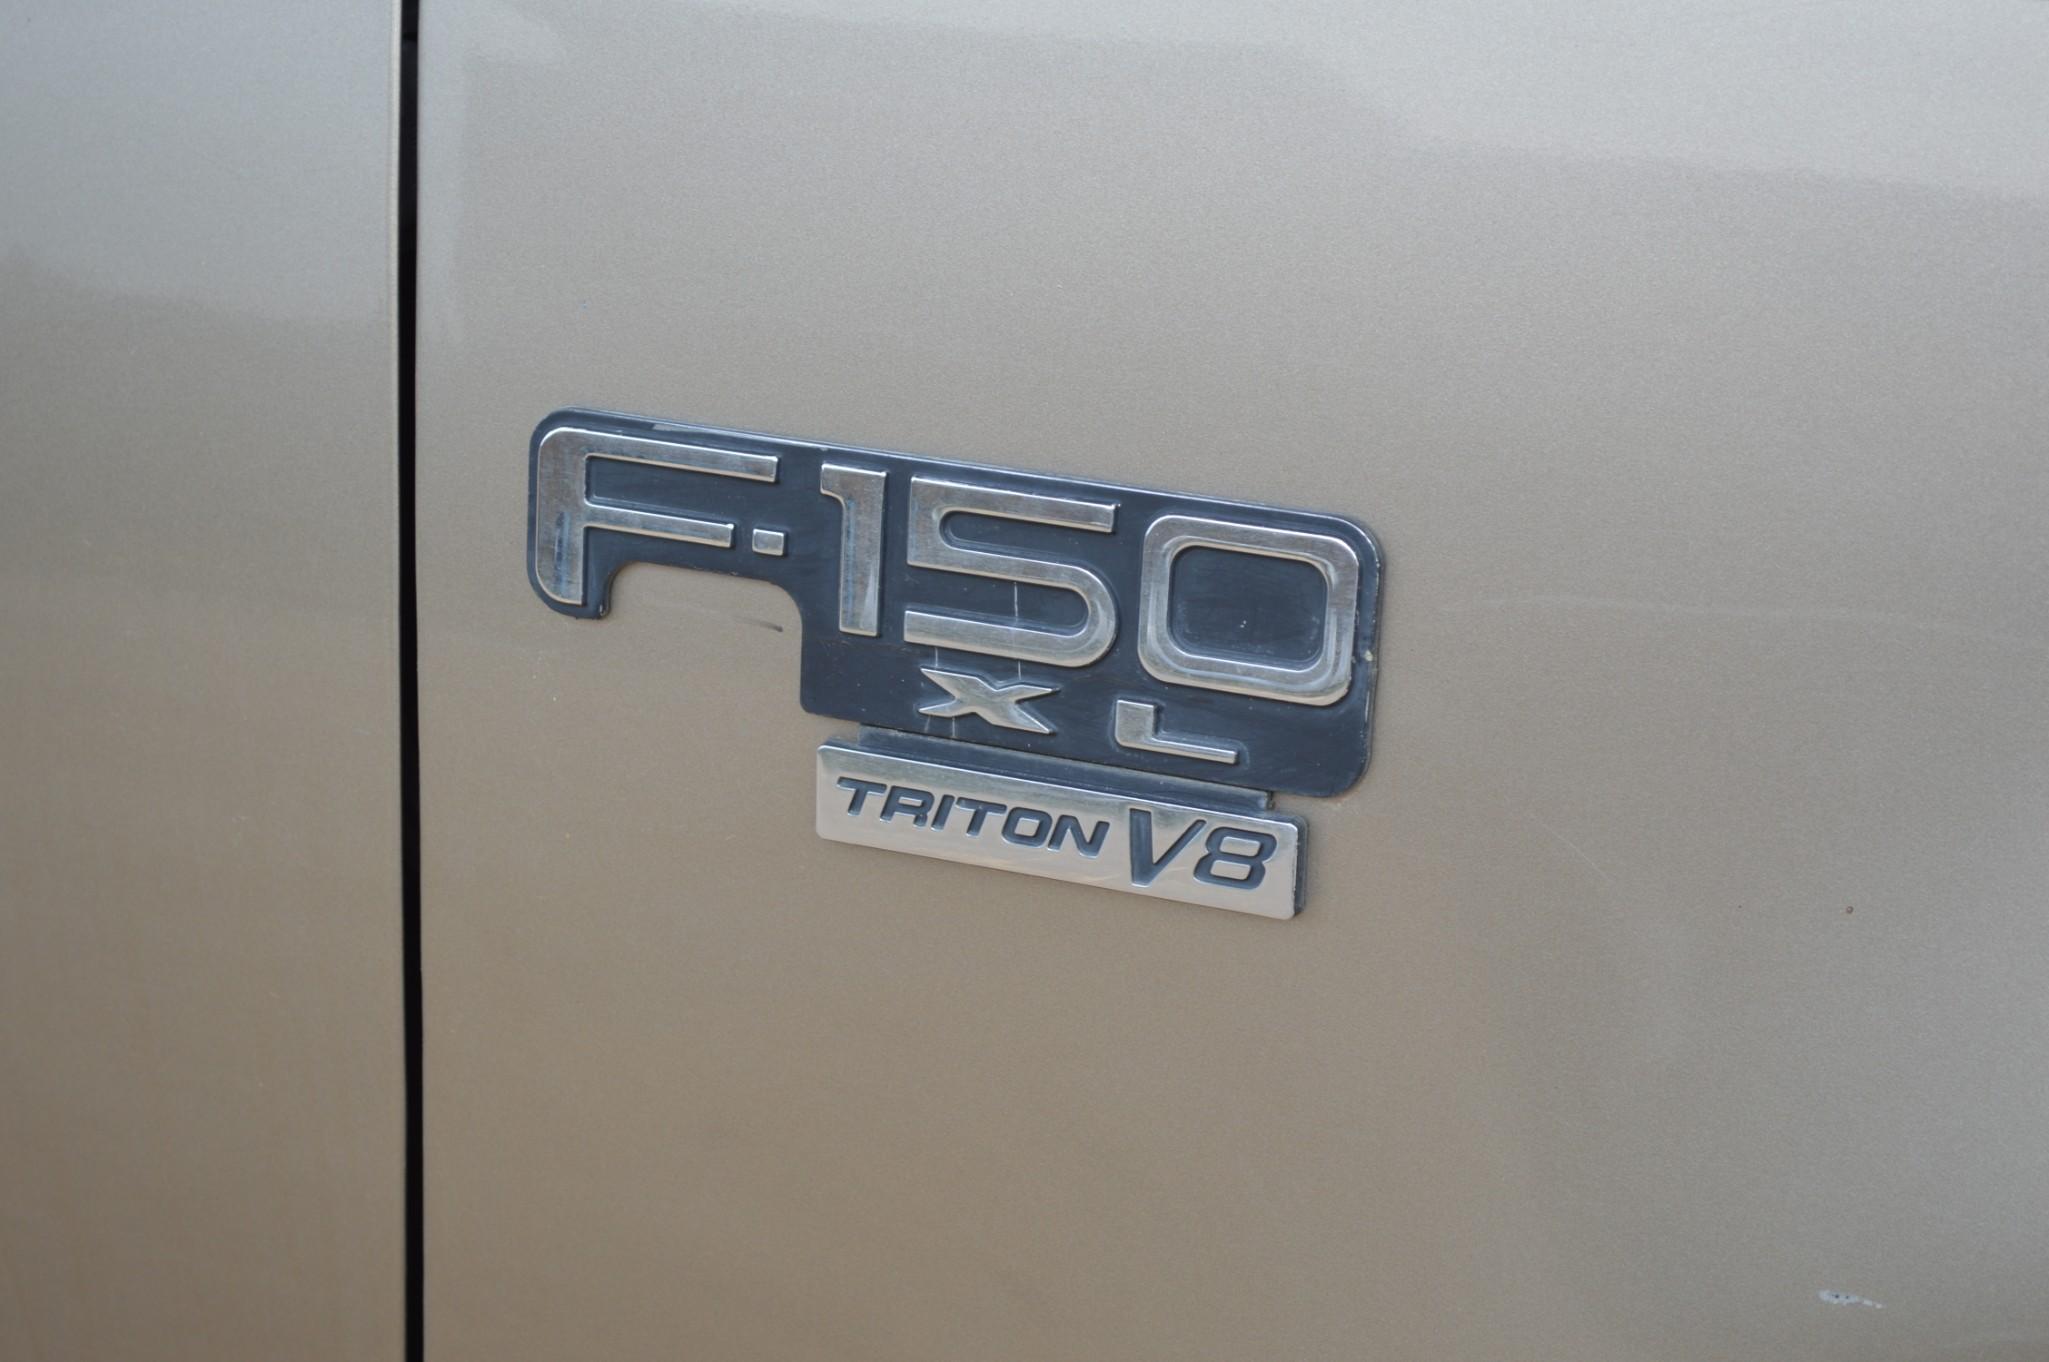 2001 Ford F-150XL 4x4, Triton V8, 4.6L, Gasoline, Automatic